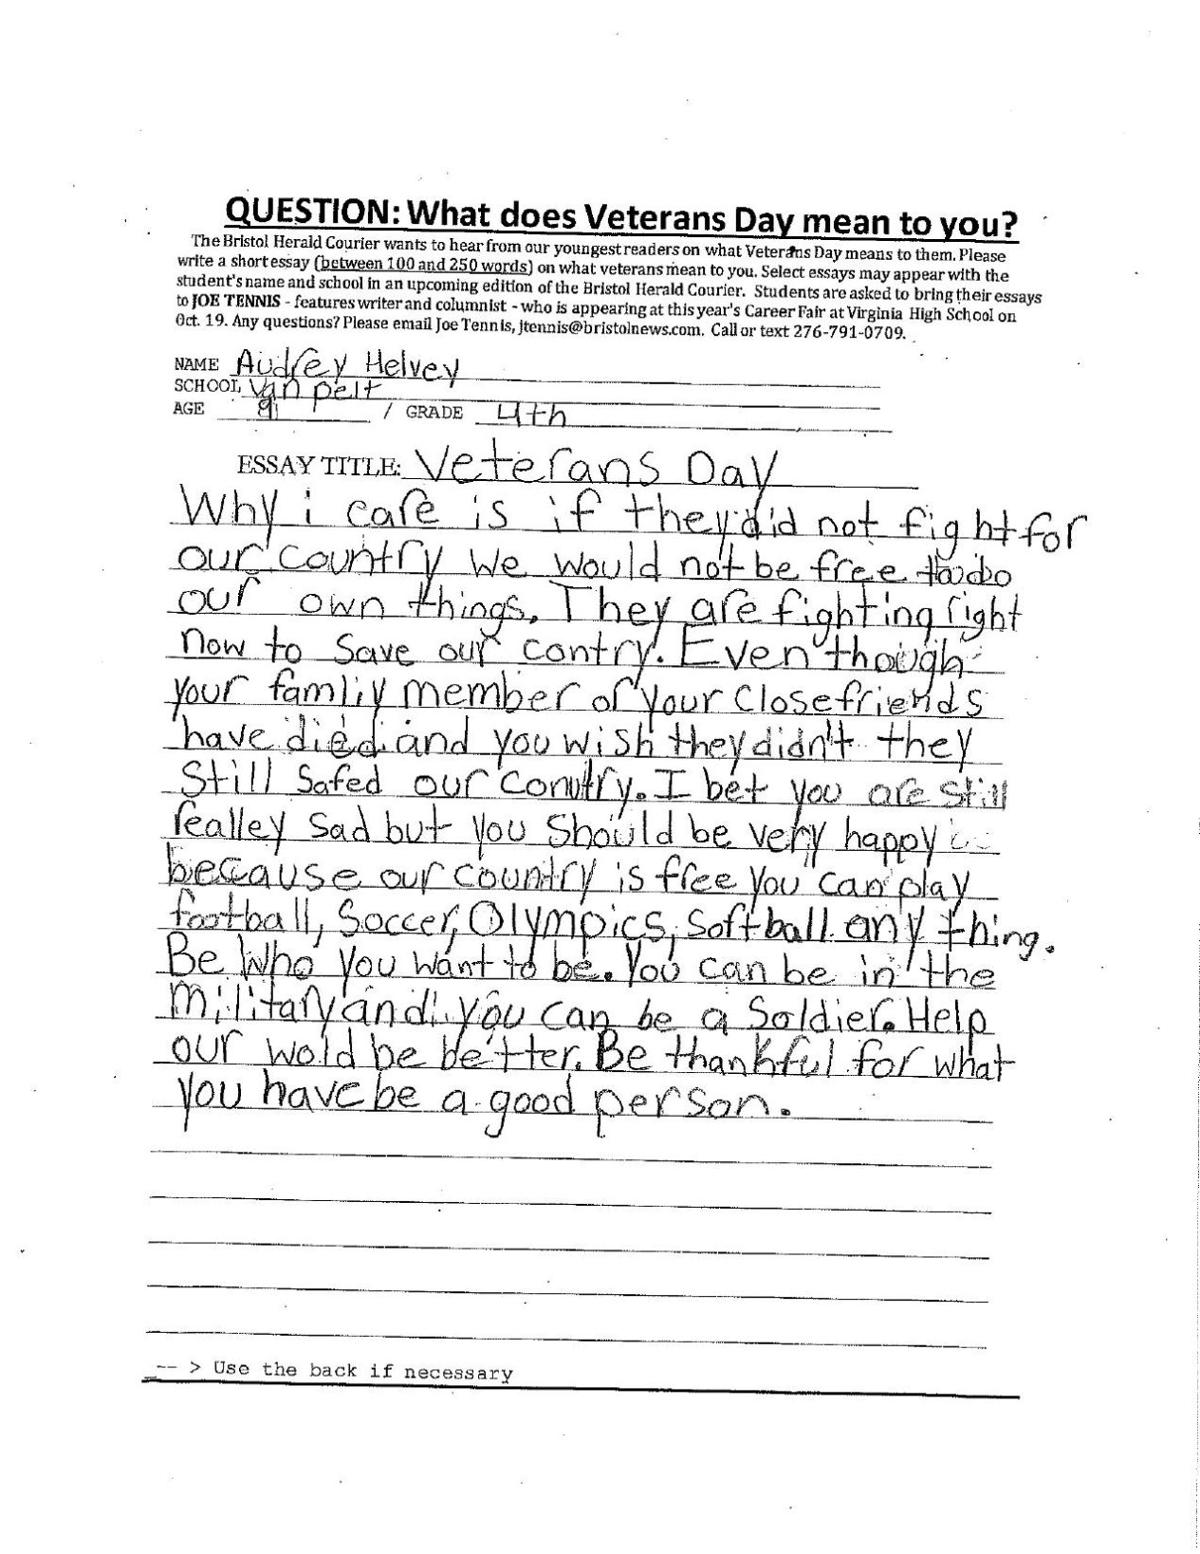 essay on pledge to veterans